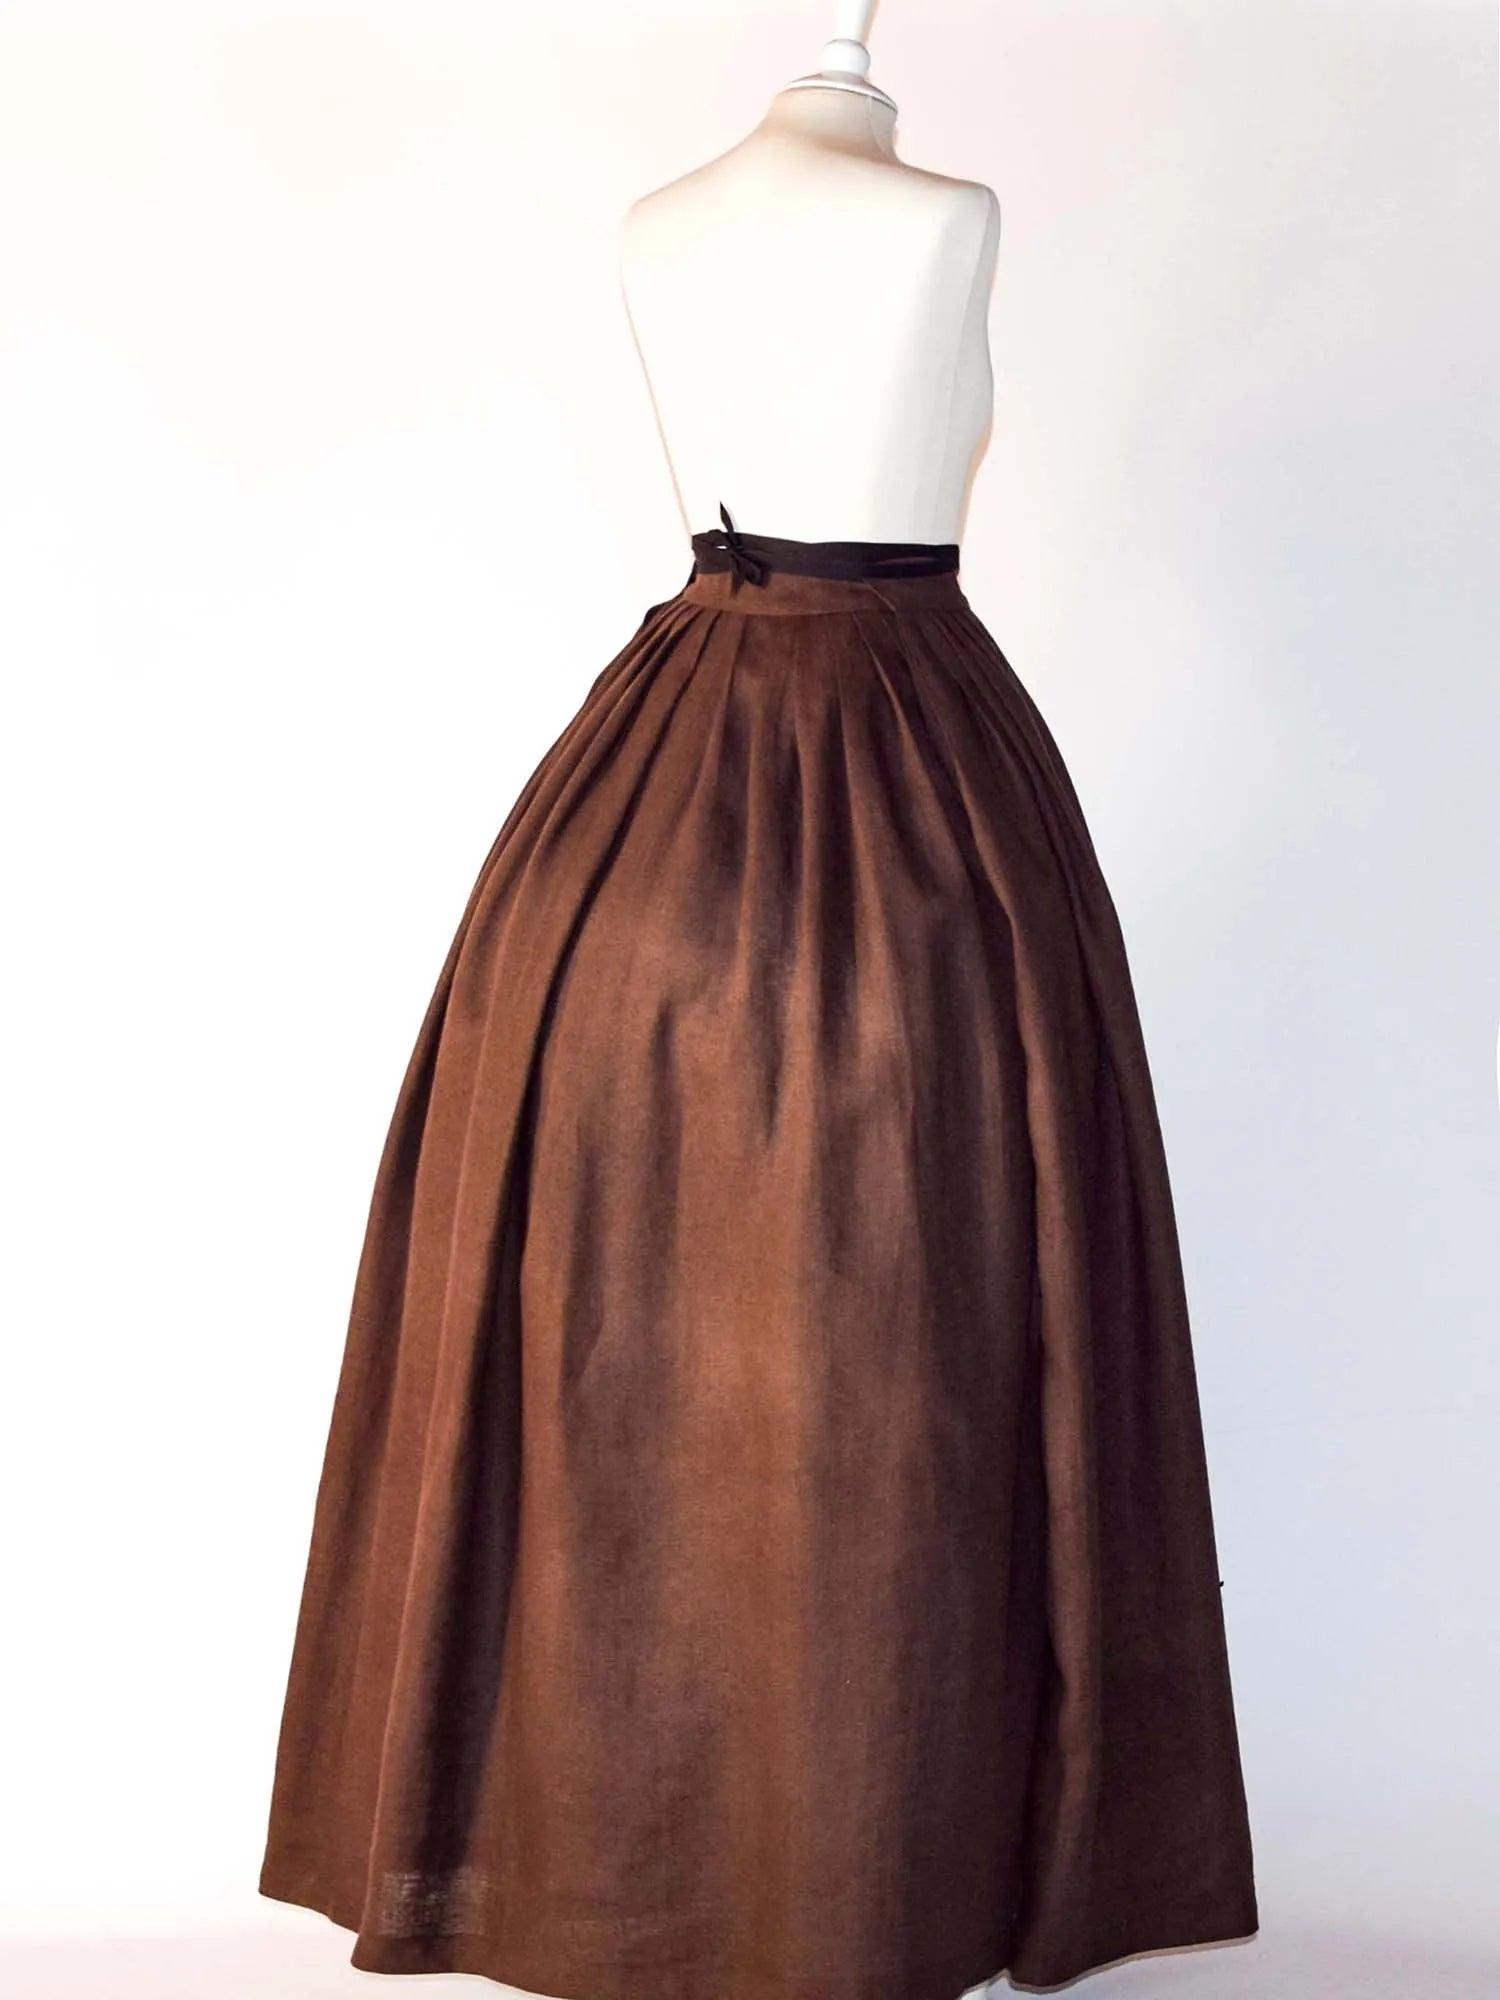 HELOISE, Historical Skirt in Chocolate Linen - Atelier Serraspina